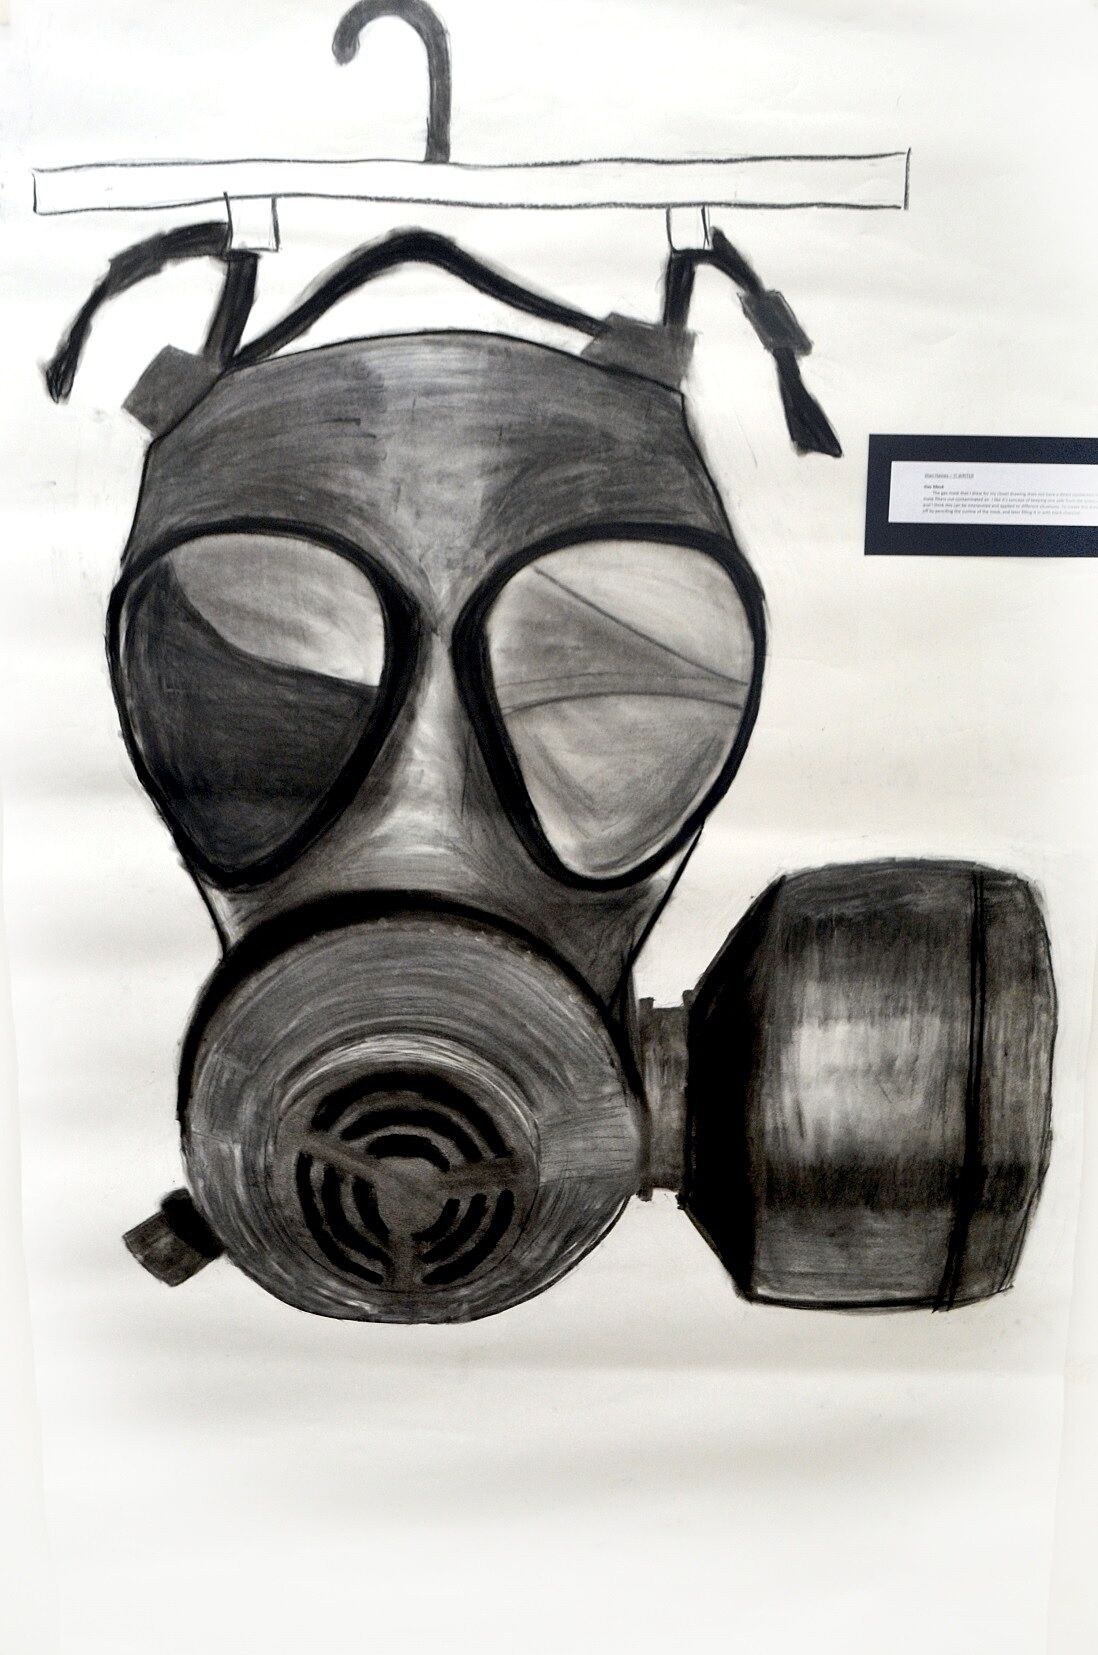 Jitan contributes a gas mask to the closet, May 2013.